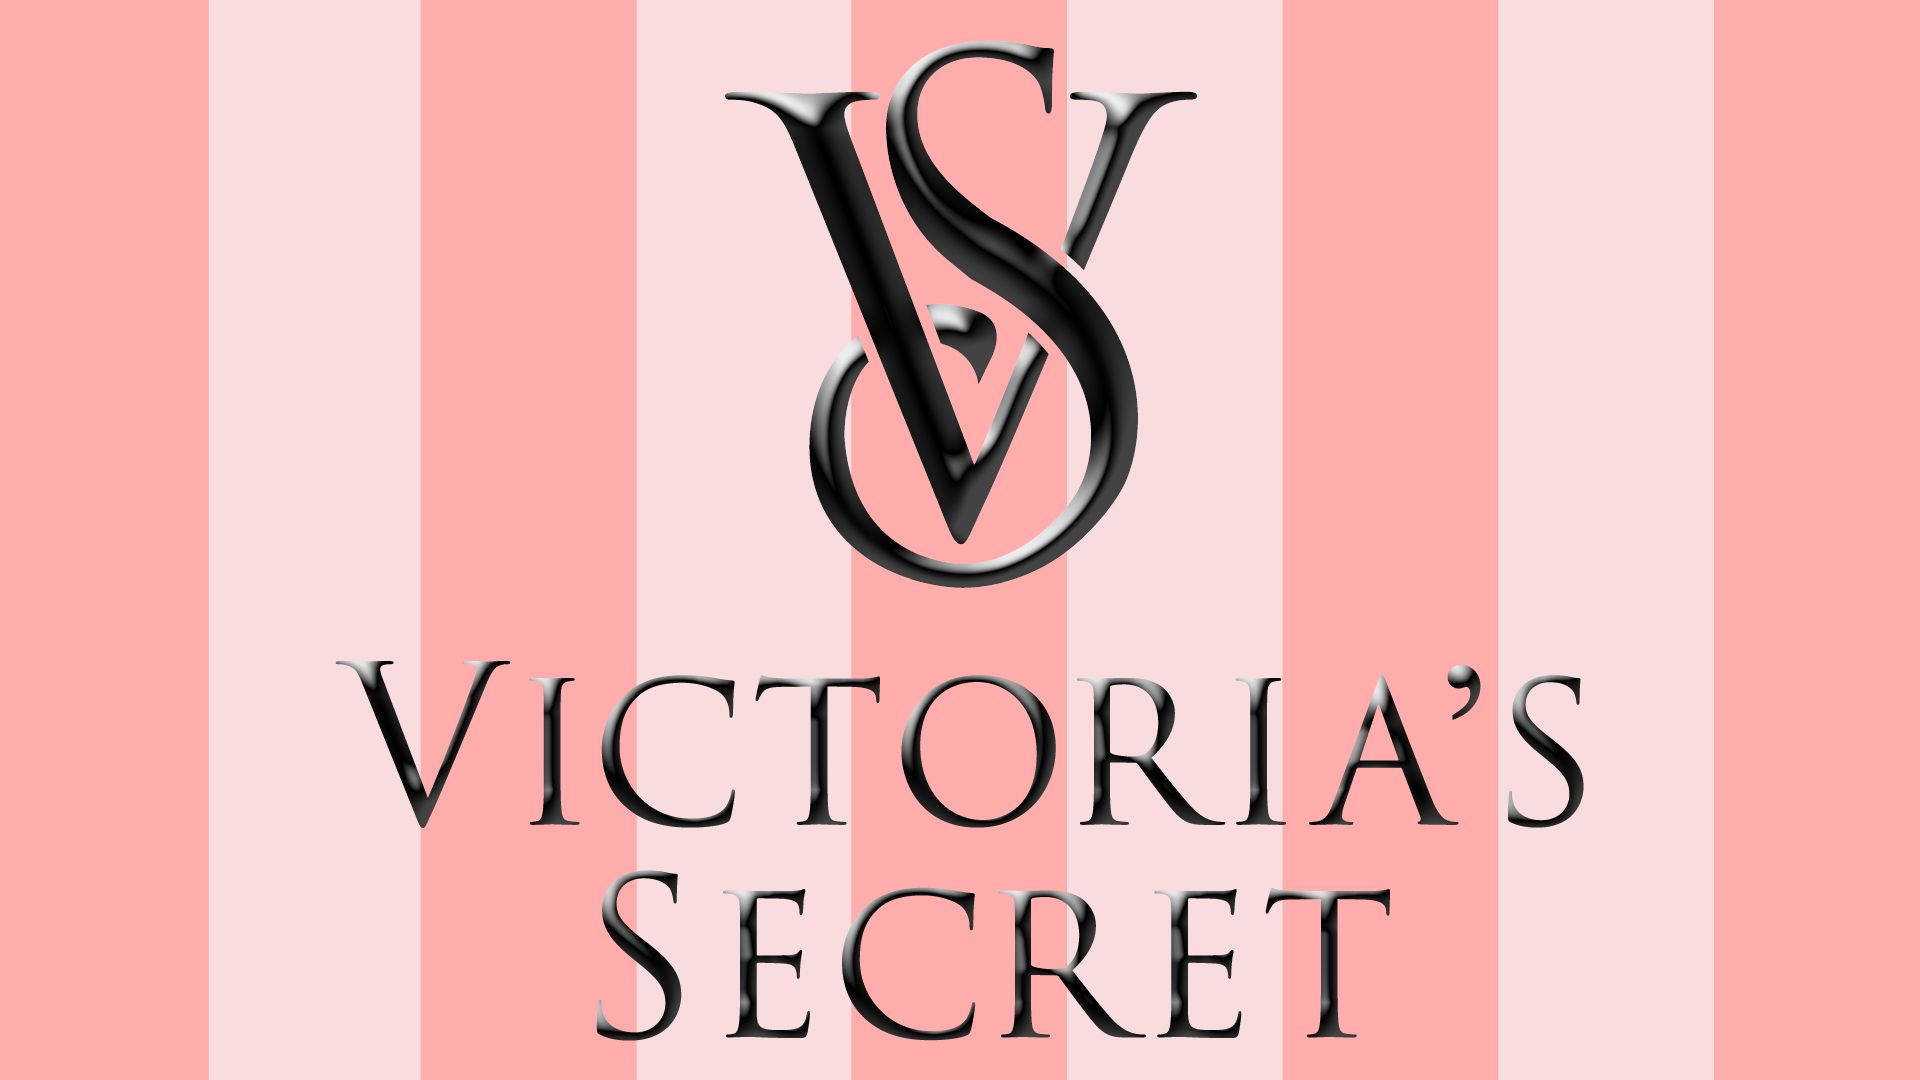 Victoria Secret 1920X1080 Wallpaper and Background Image